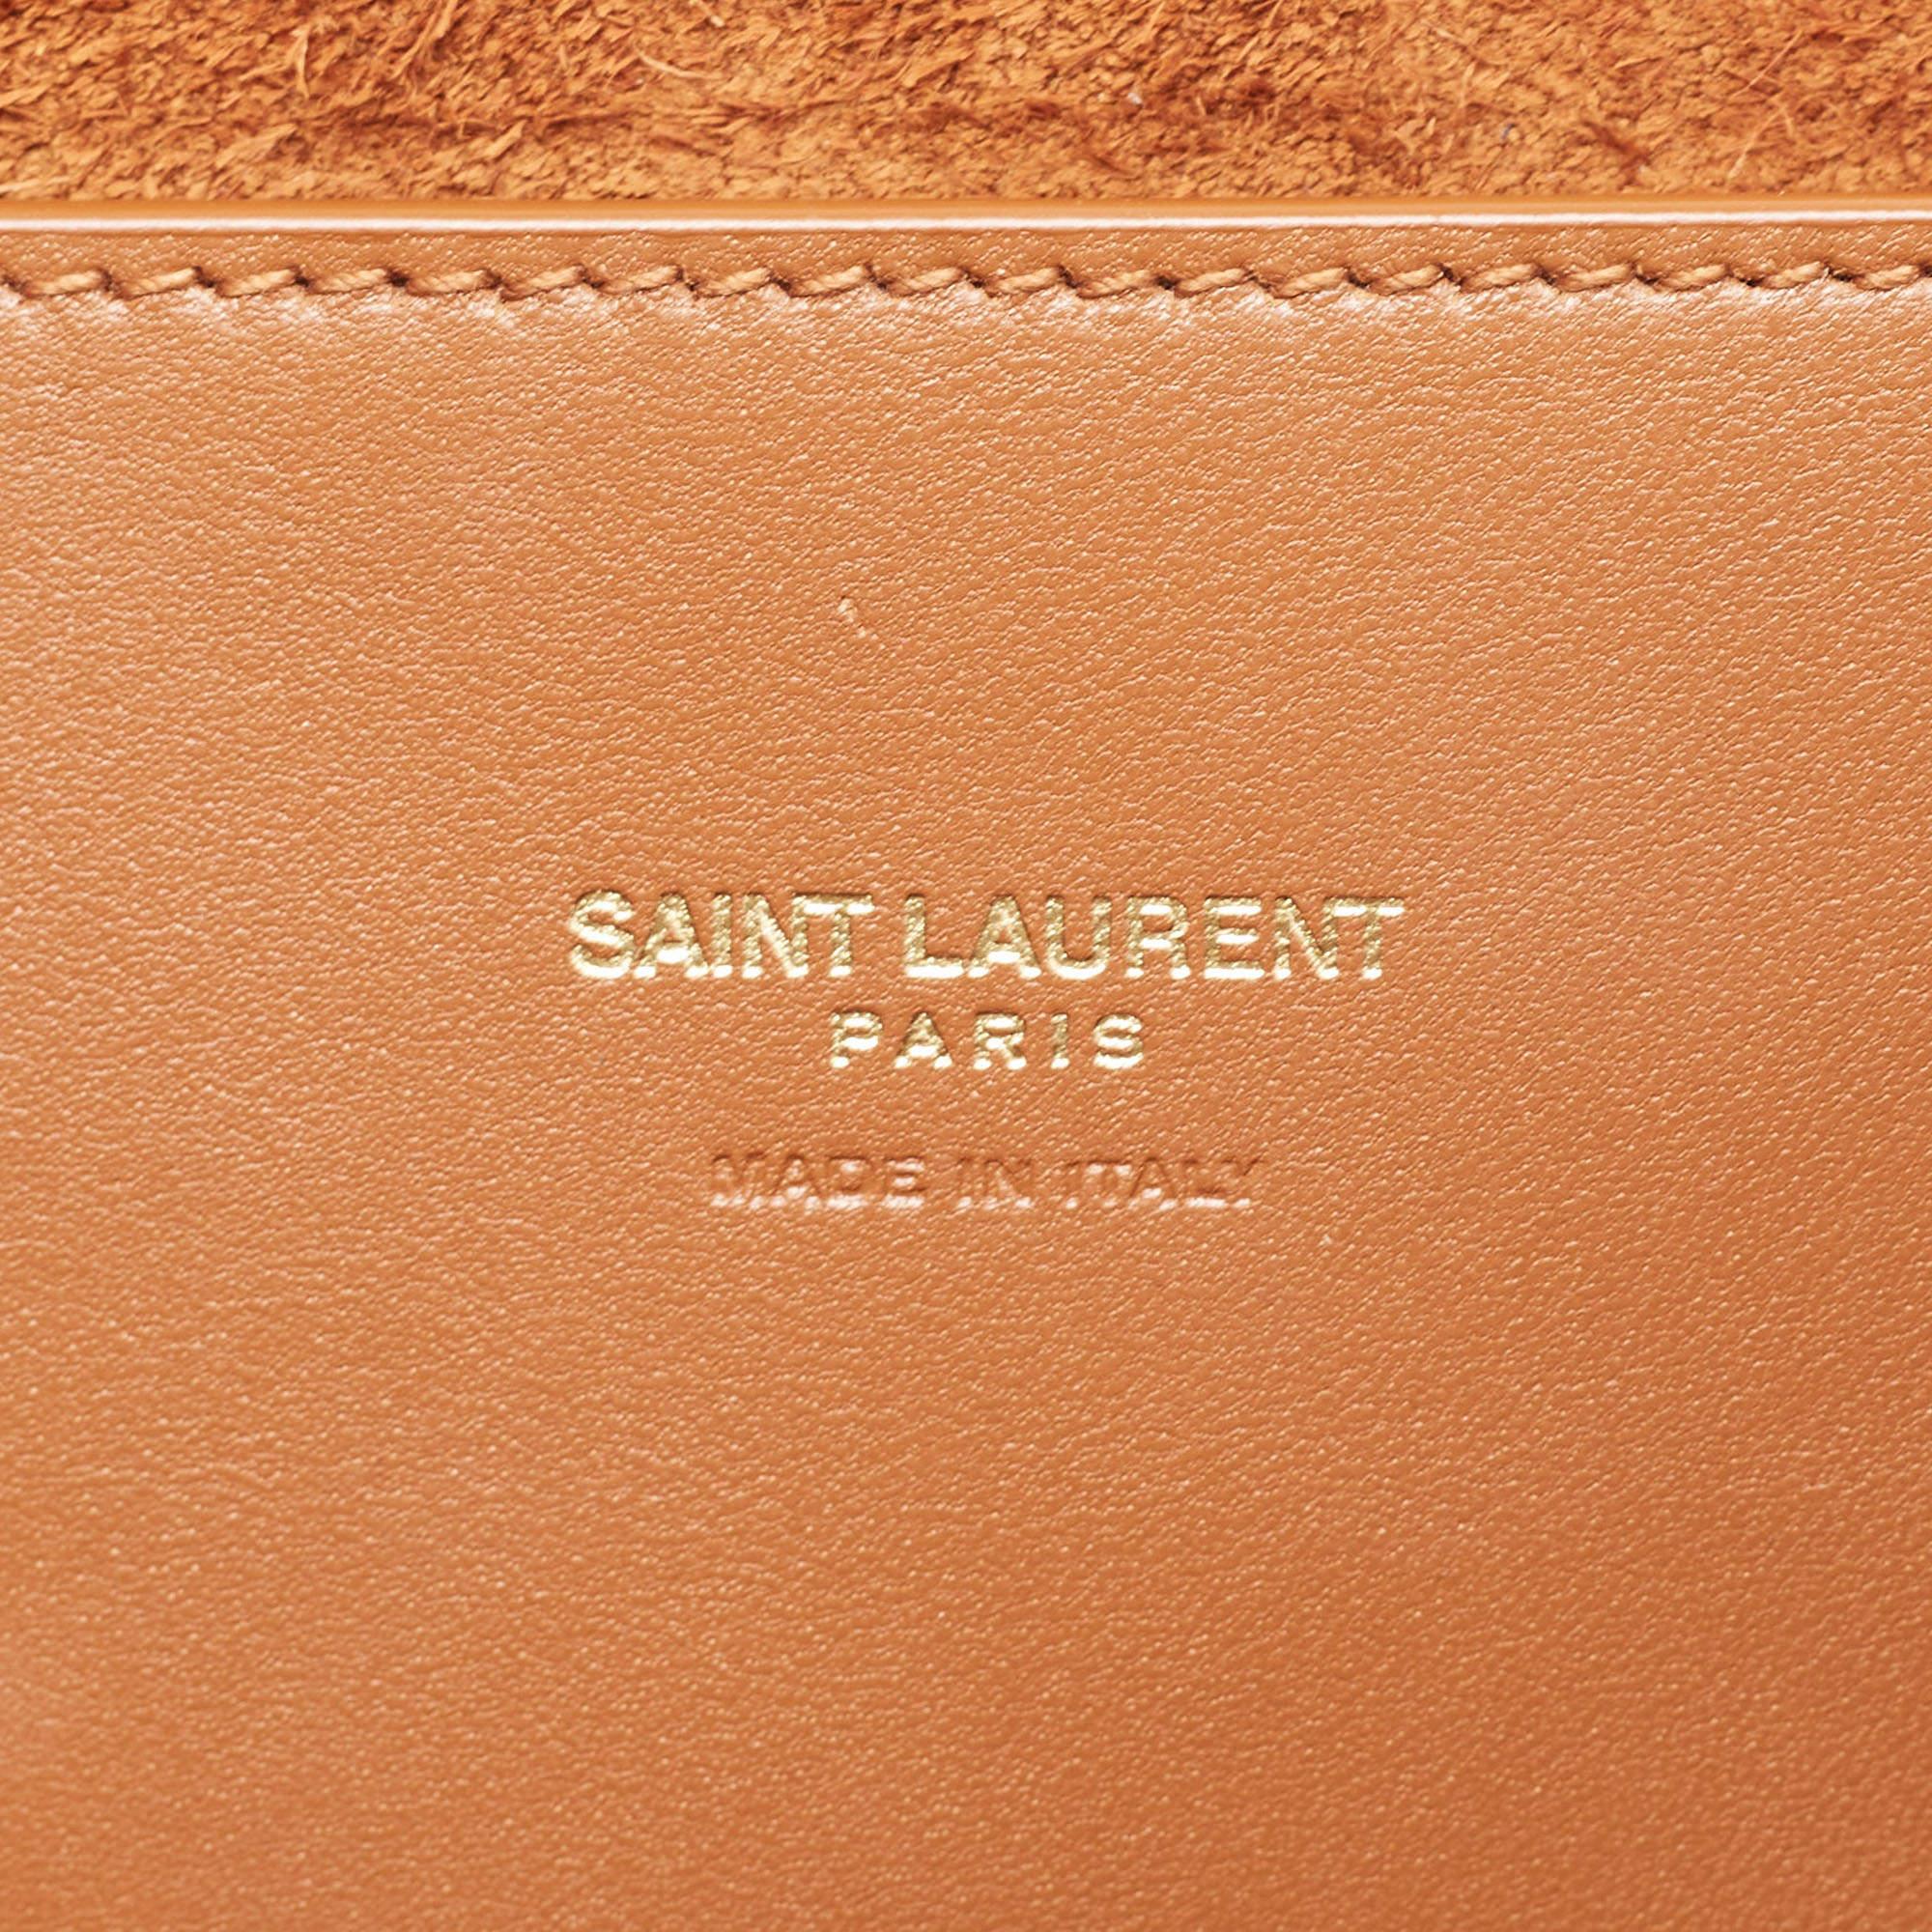 Saint Laurent Black Croc Embossed Leather and Suede Reversible Kate Bag 4